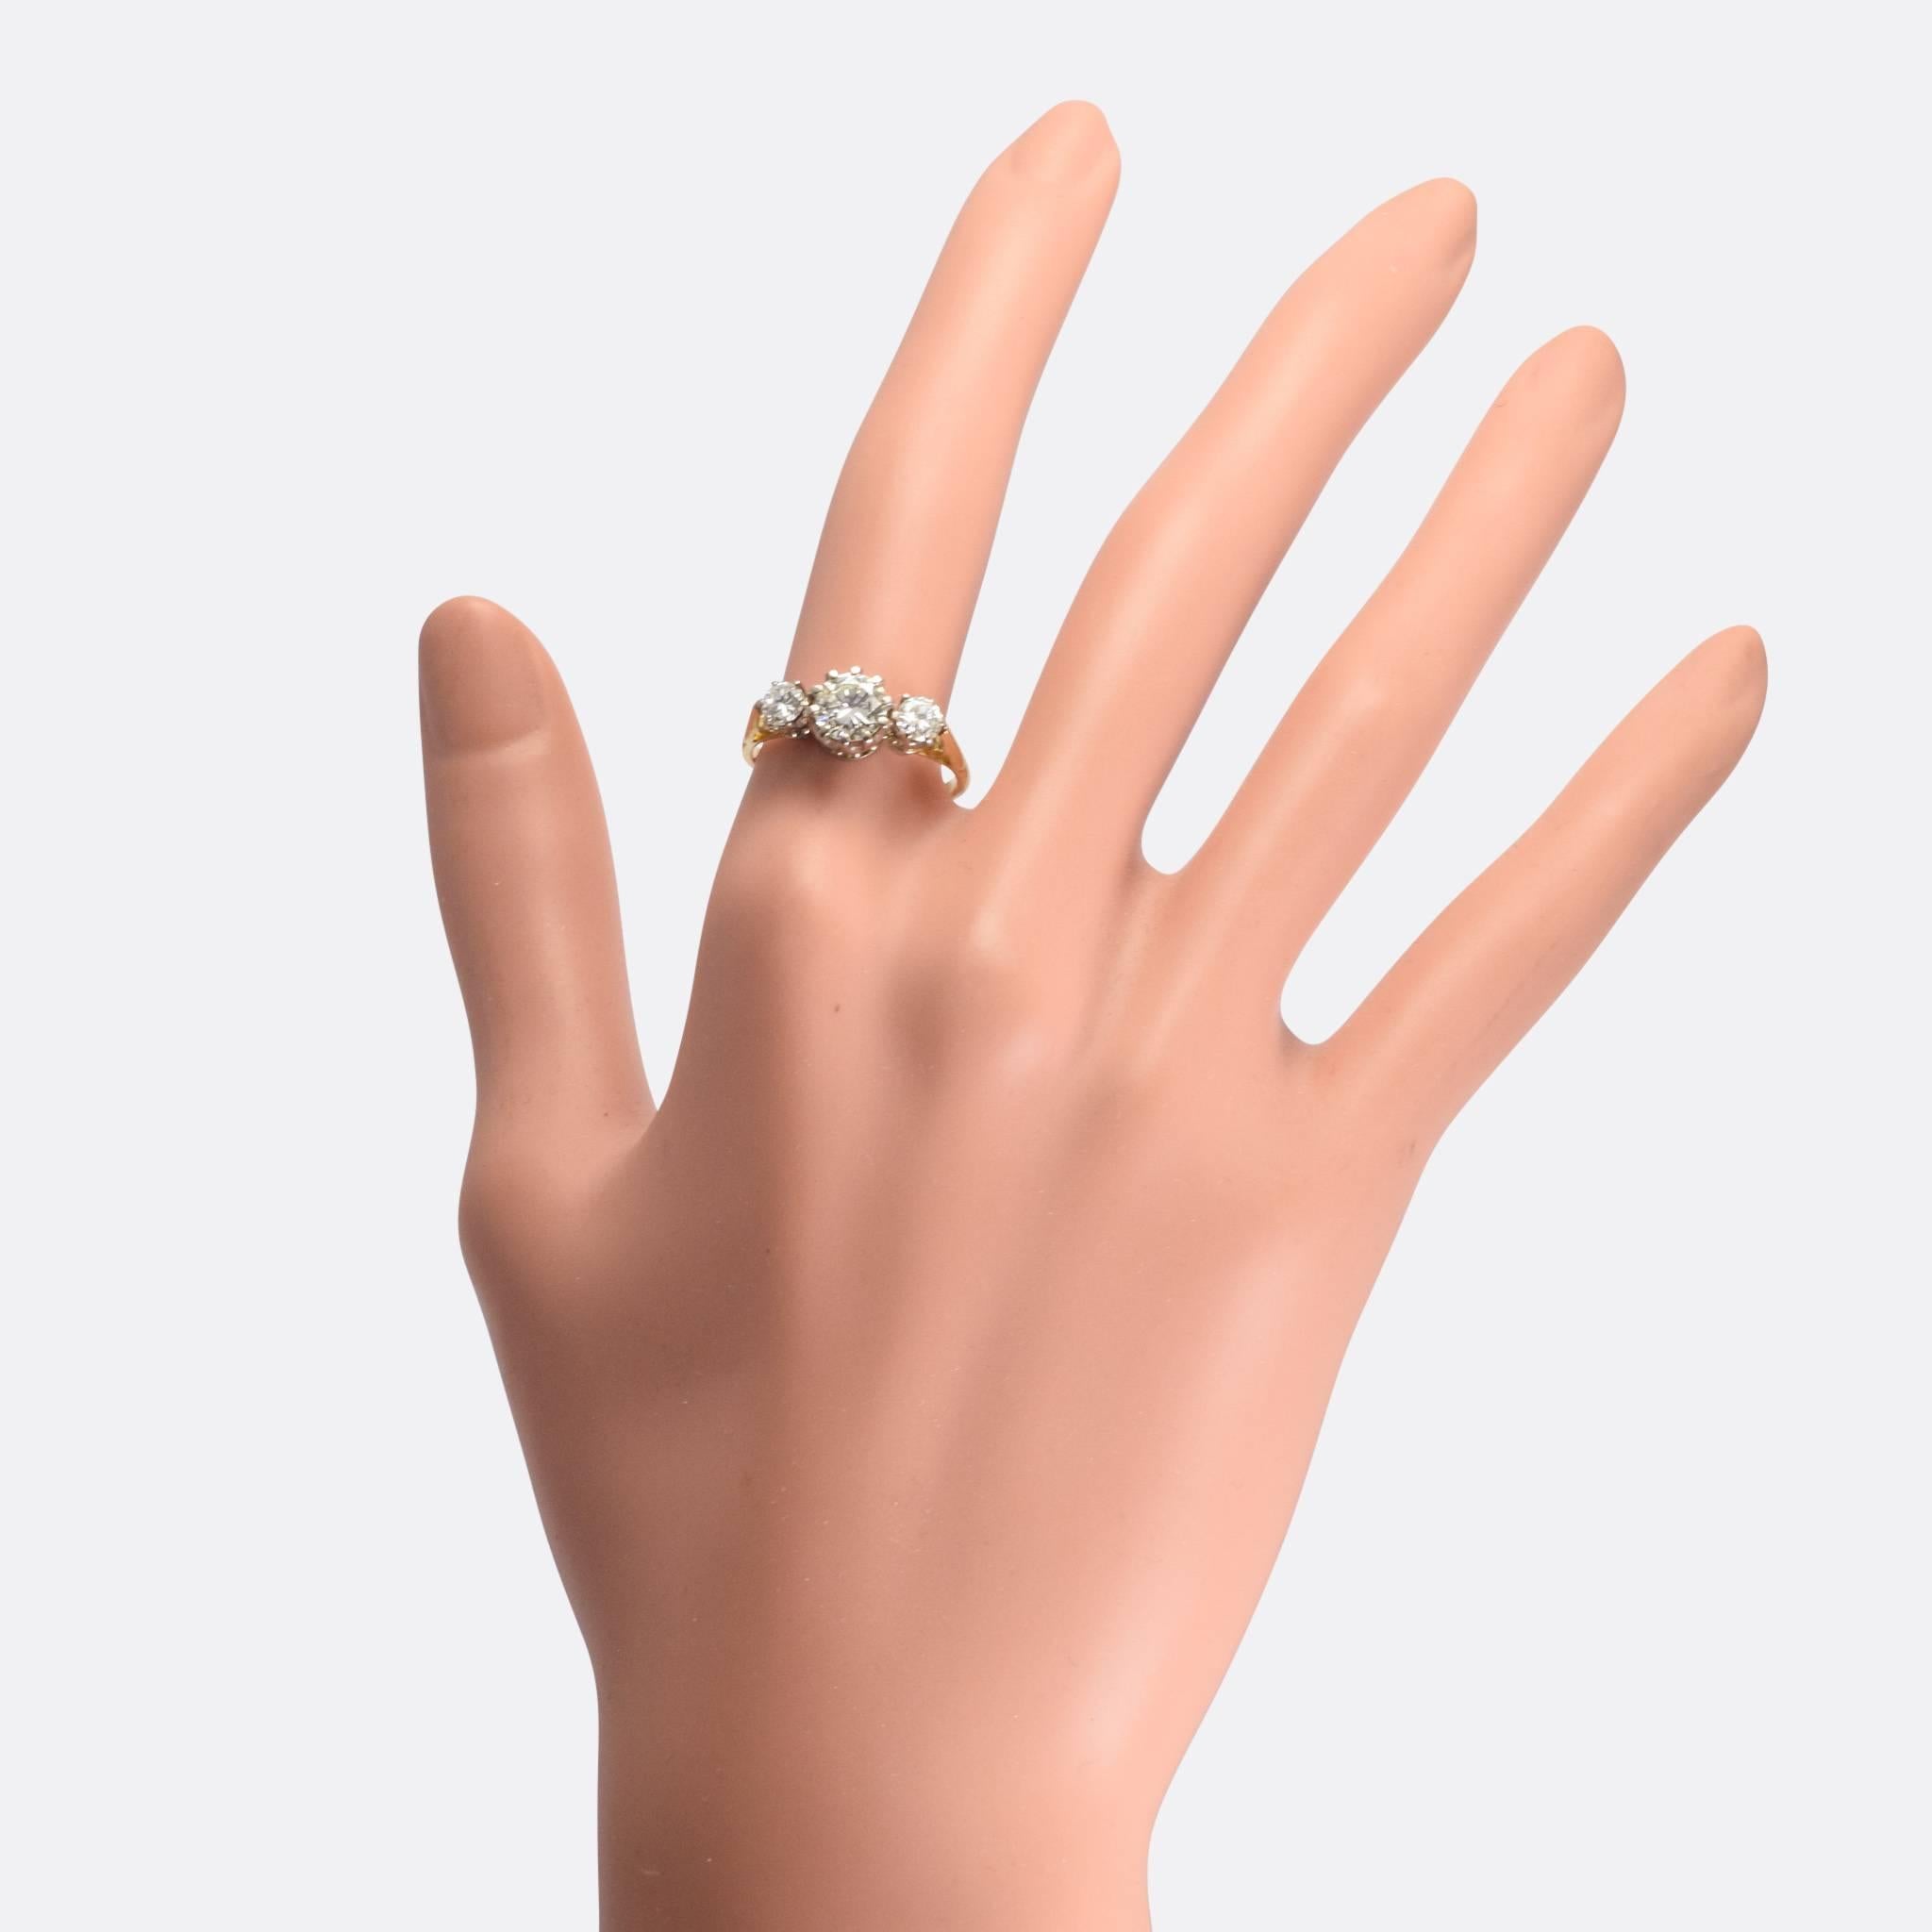 1.5 ct diamond ring